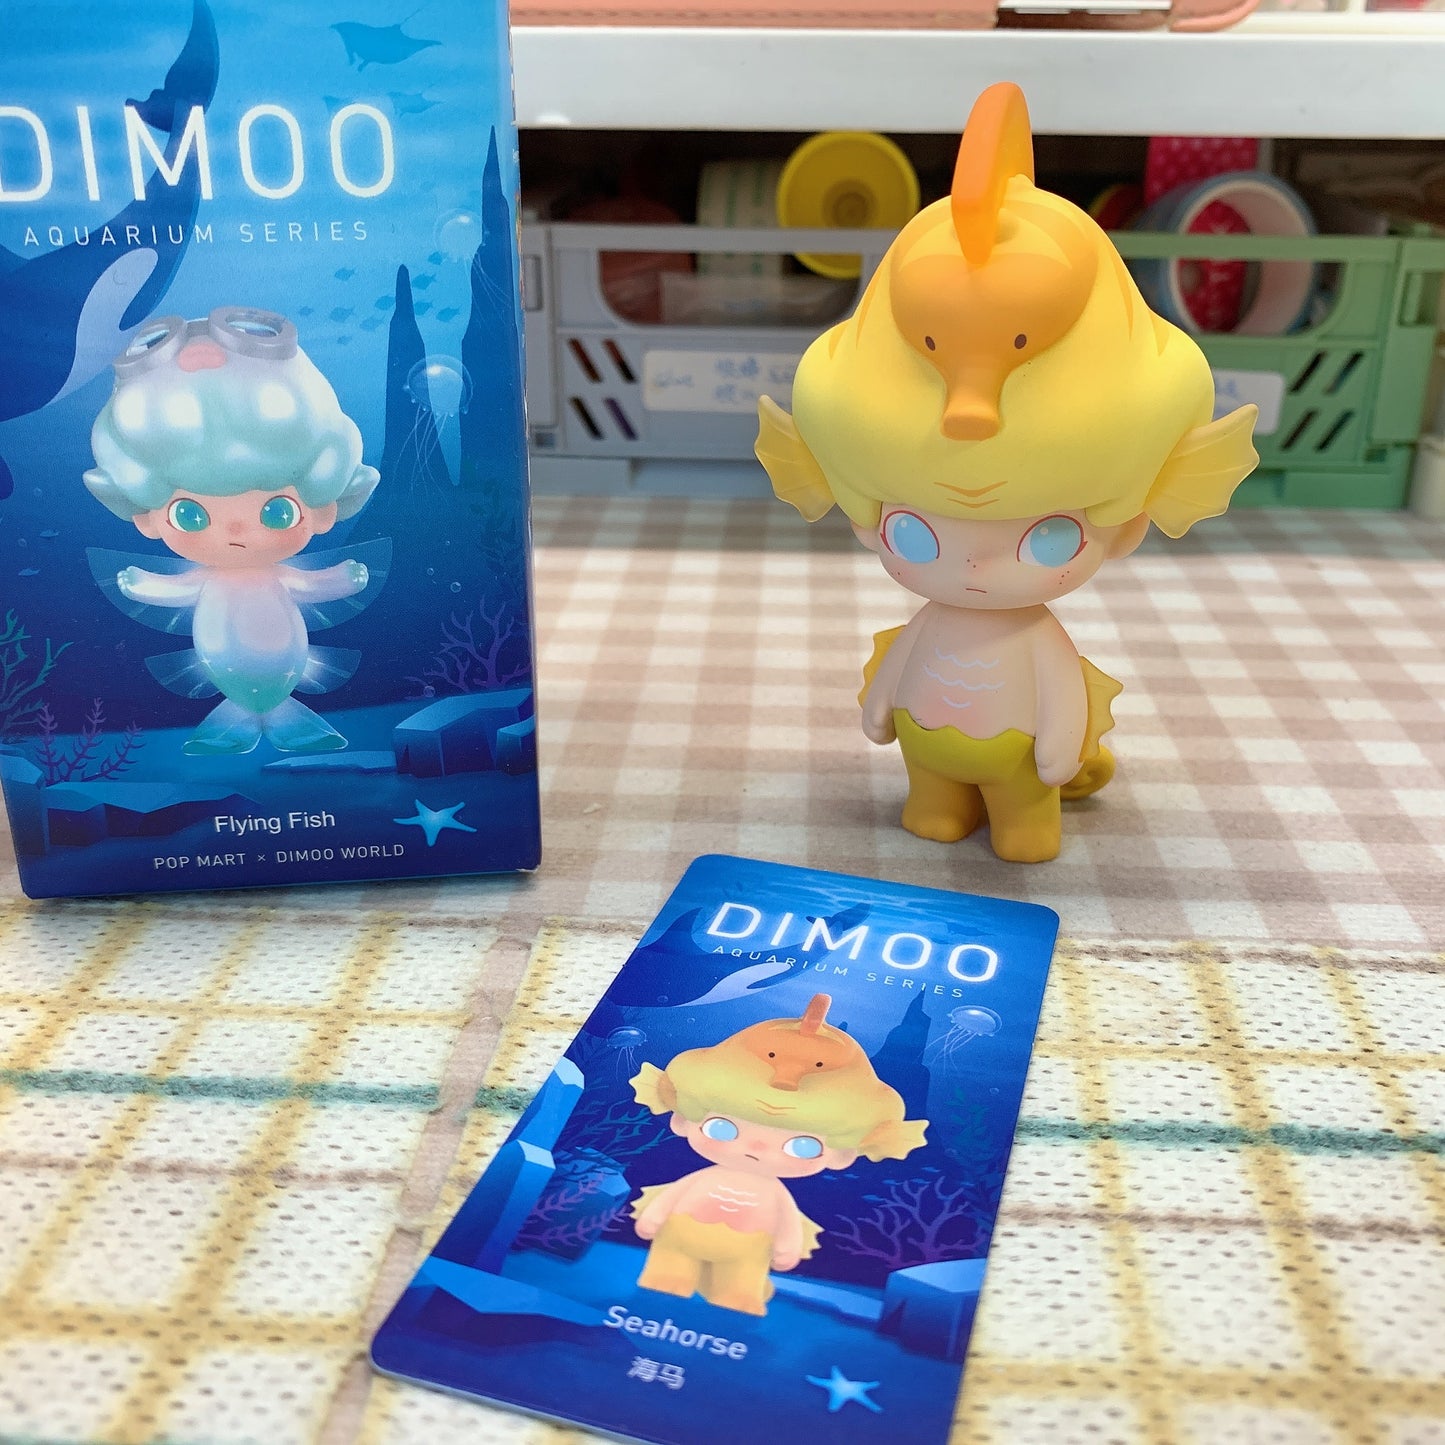 【PRELOVED and SALE 】POPMART Dimoo blind box toy Aquarium series Seahorse